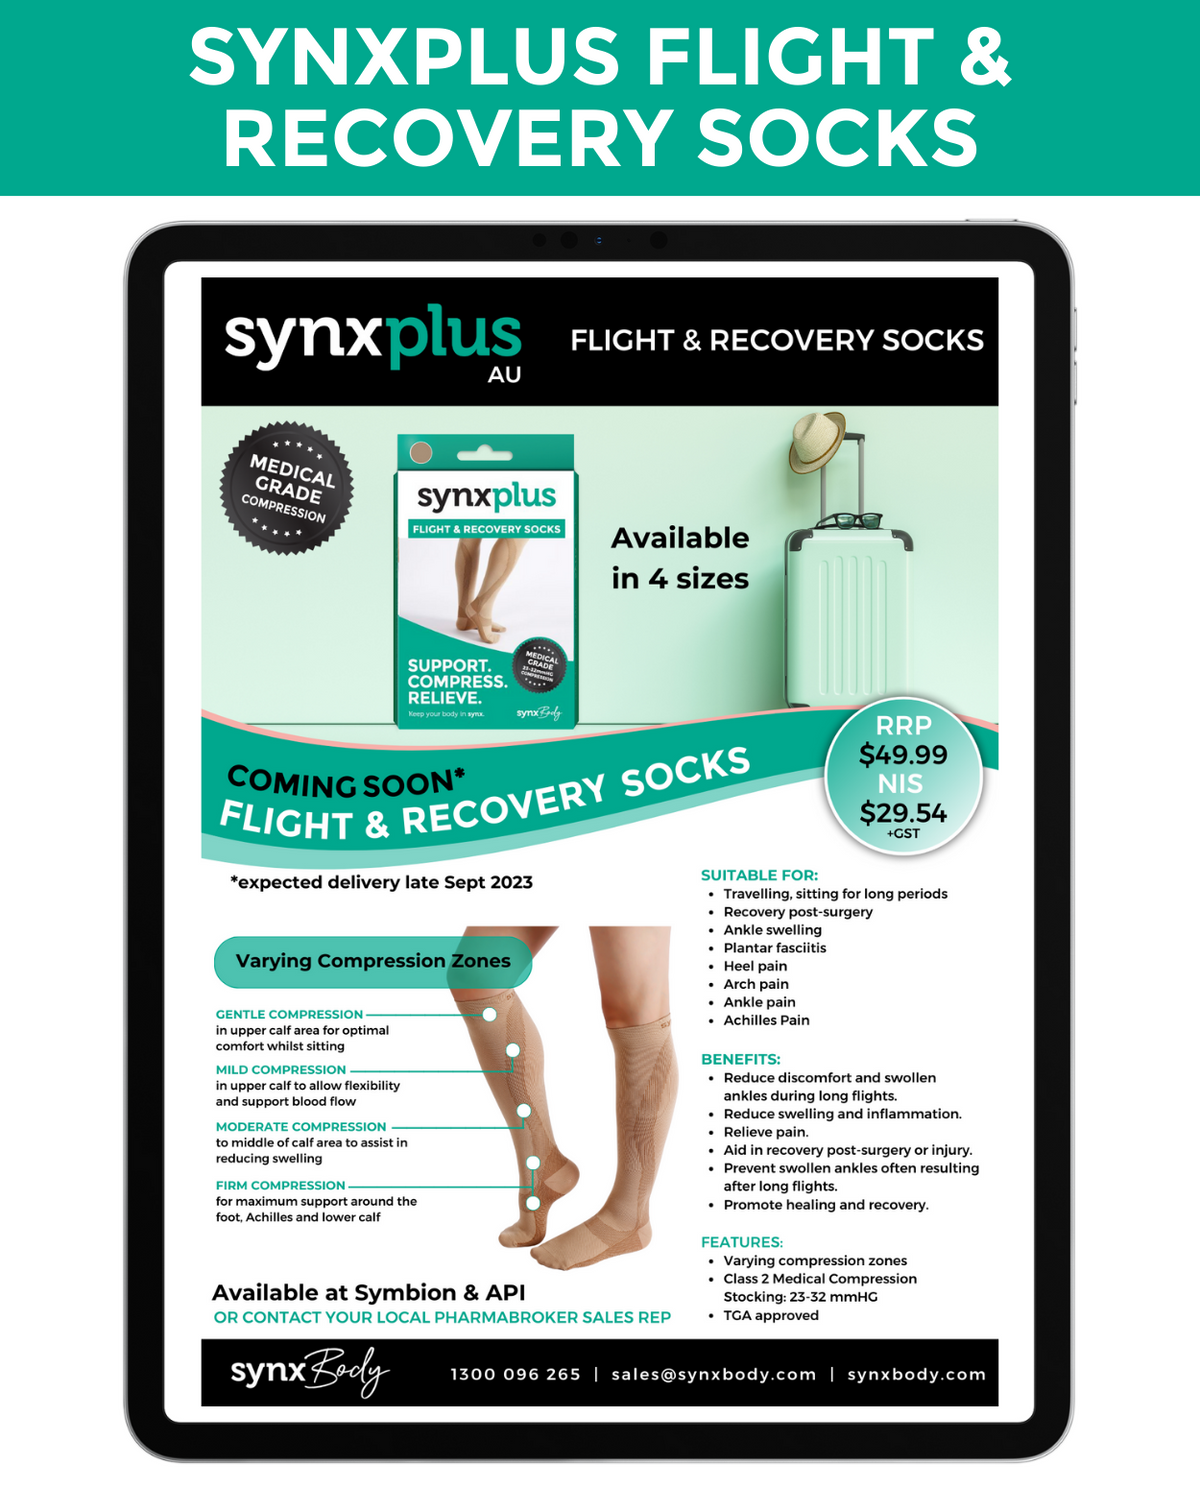 Synxplus flight & recovery socks